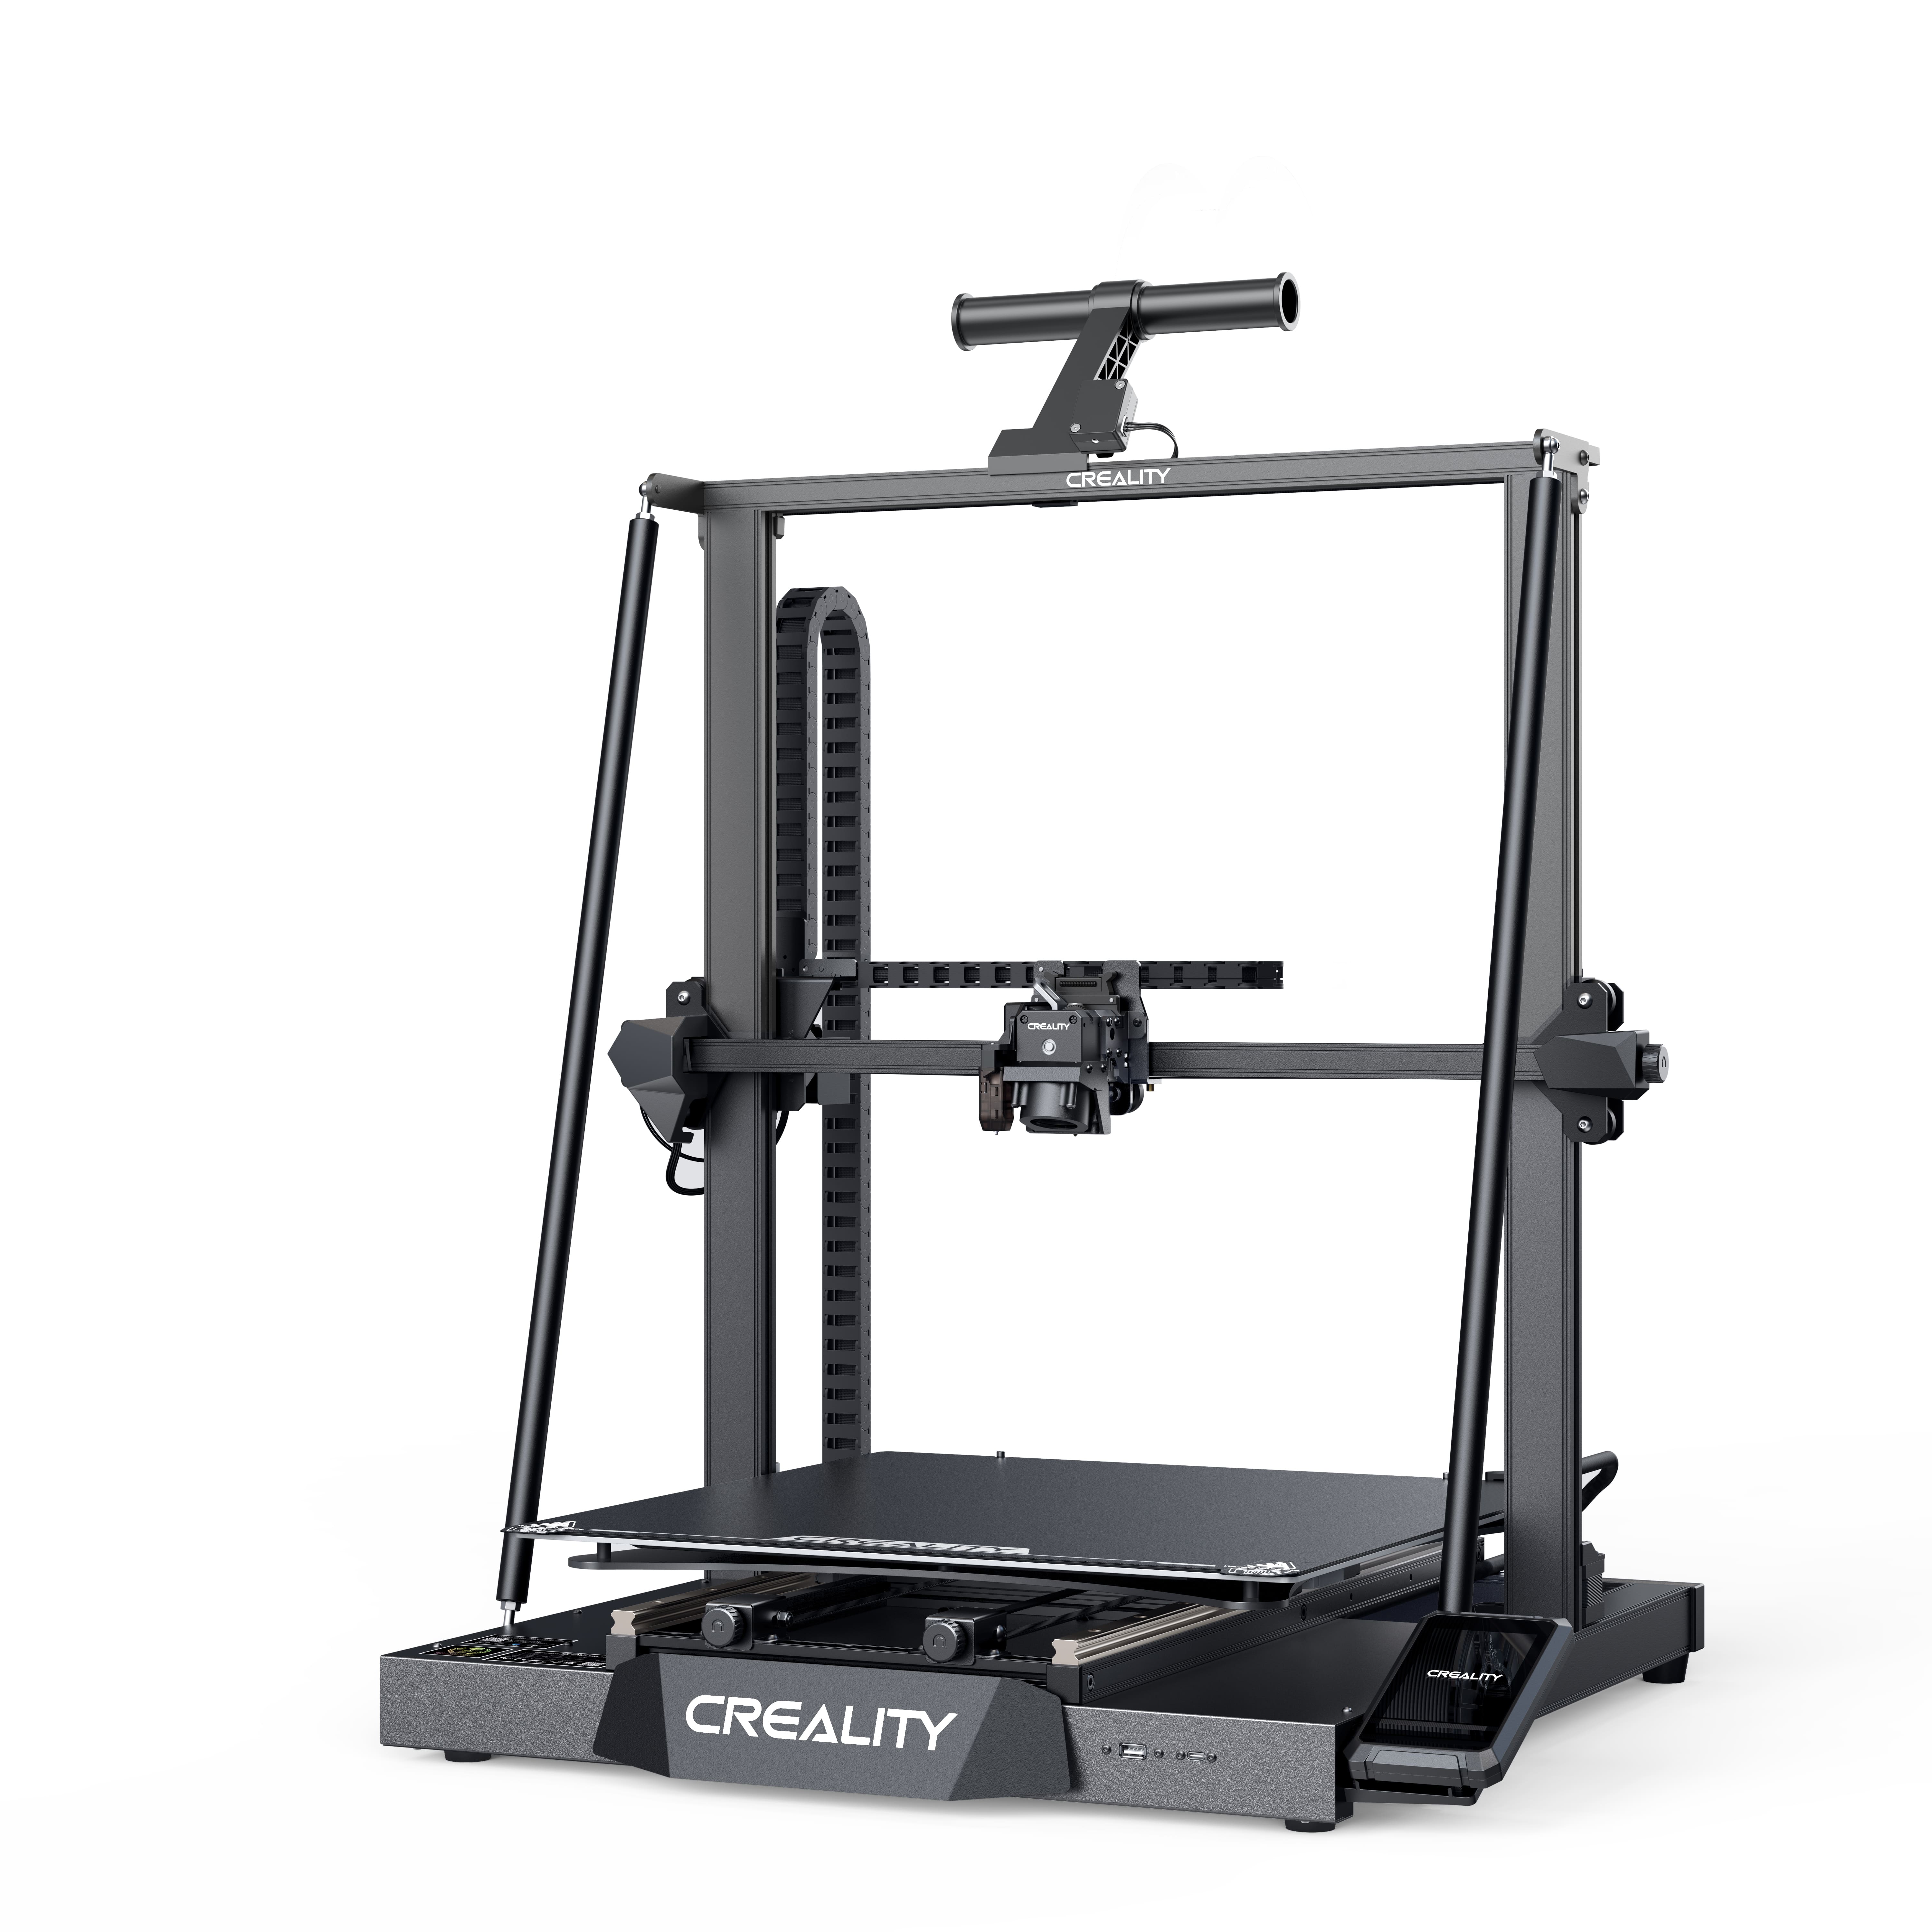 Creality-UK-official-store-CR-M4-3D-printer-in-stock2-D0U.jpg